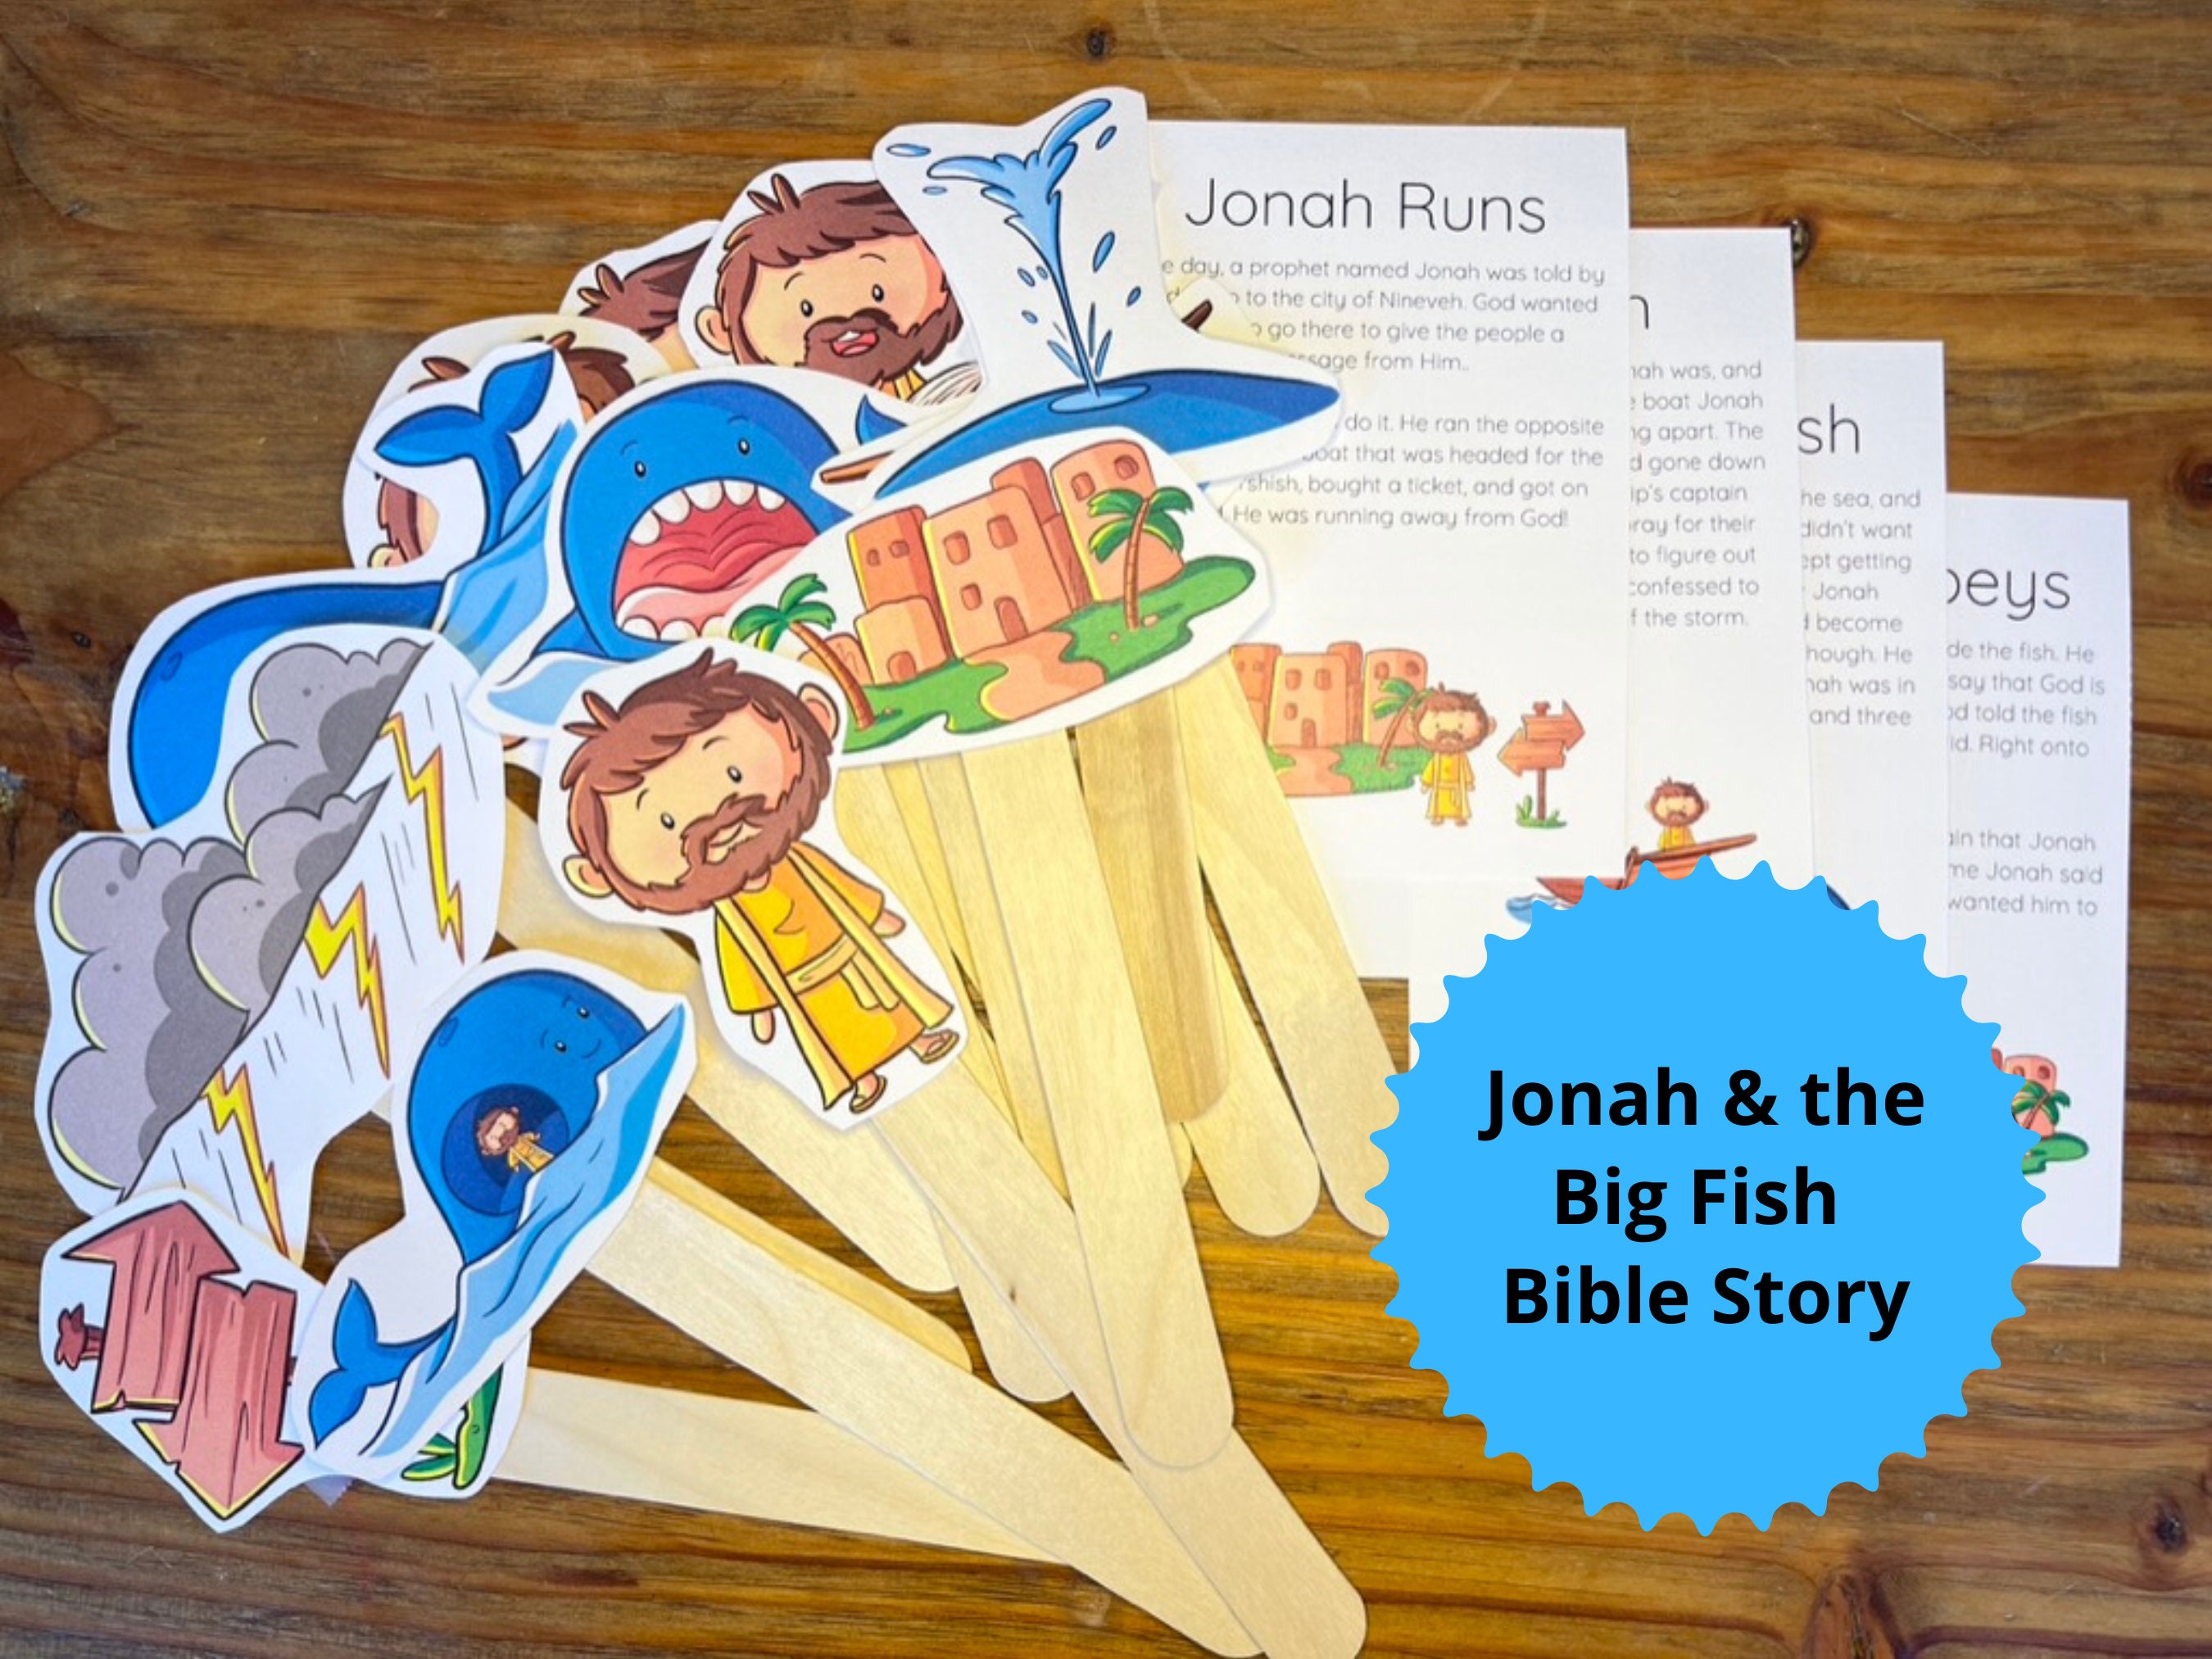 Bible Story Crafts Bundle, 48 Bible Crafts for Kids, Homeschool